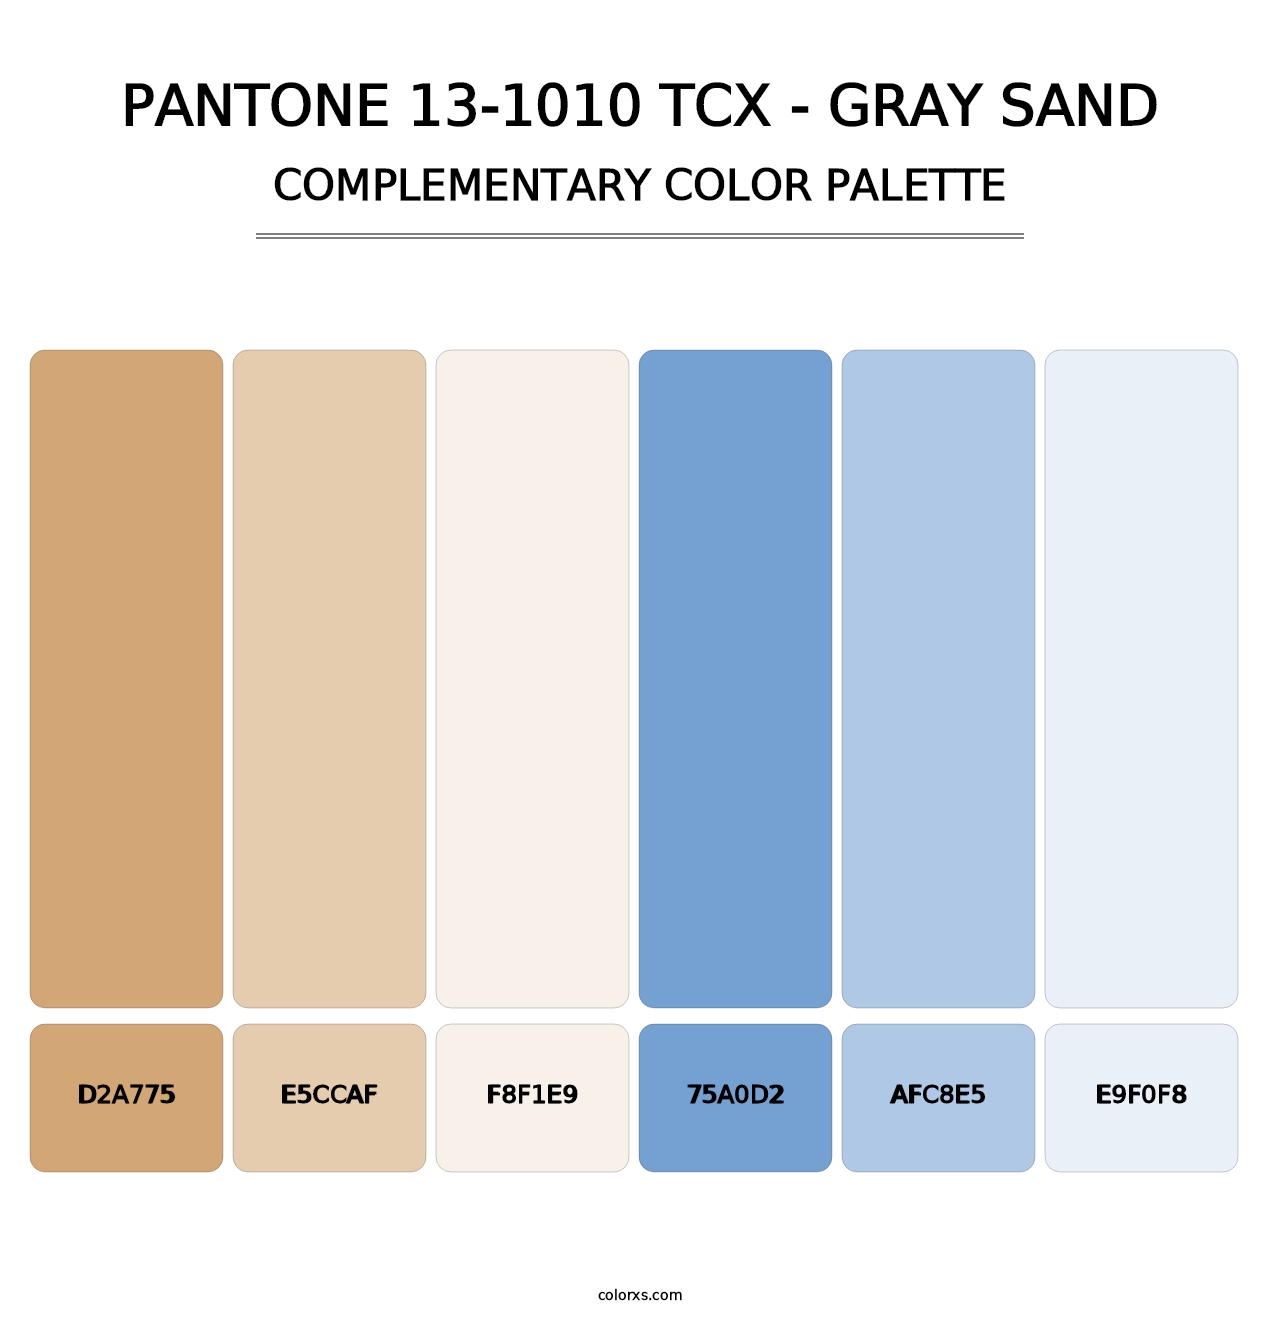 PANTONE 13-1010 TCX - Gray Sand - Complementary Color Palette